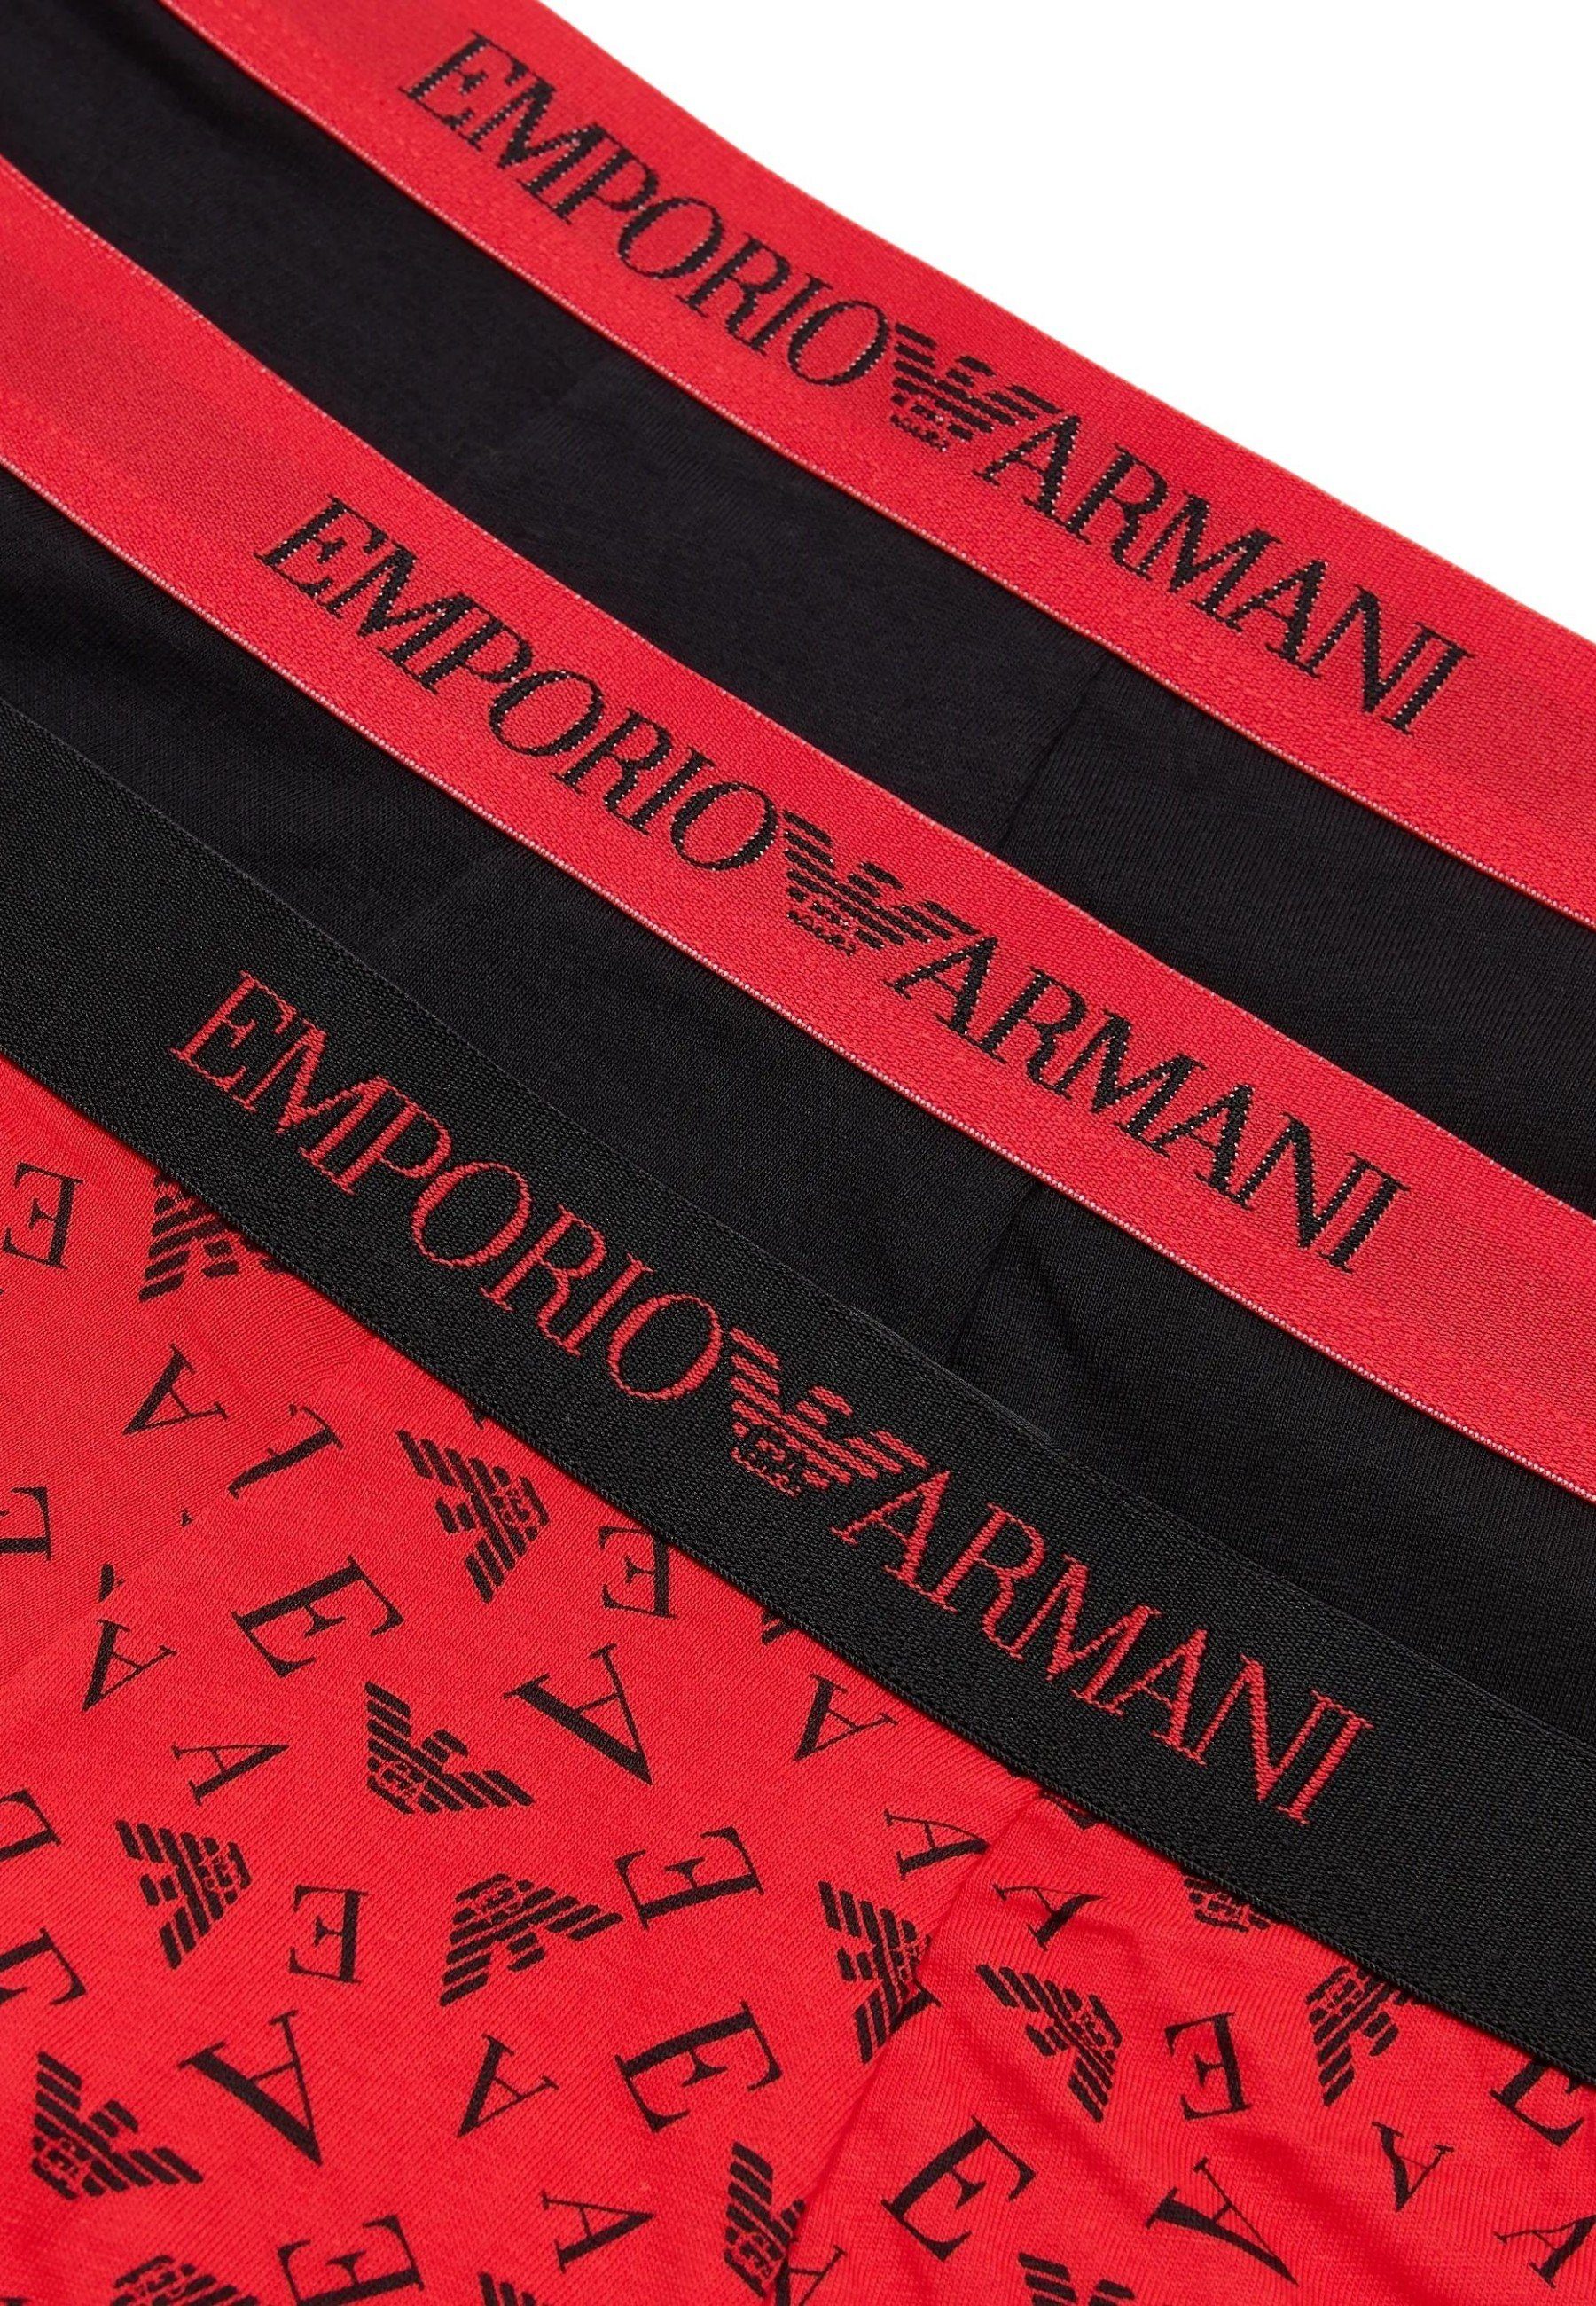 Knit Shorts Trunks (3-St) 3 Boxershorts Emporio Armani Pack Schwarz/Rot